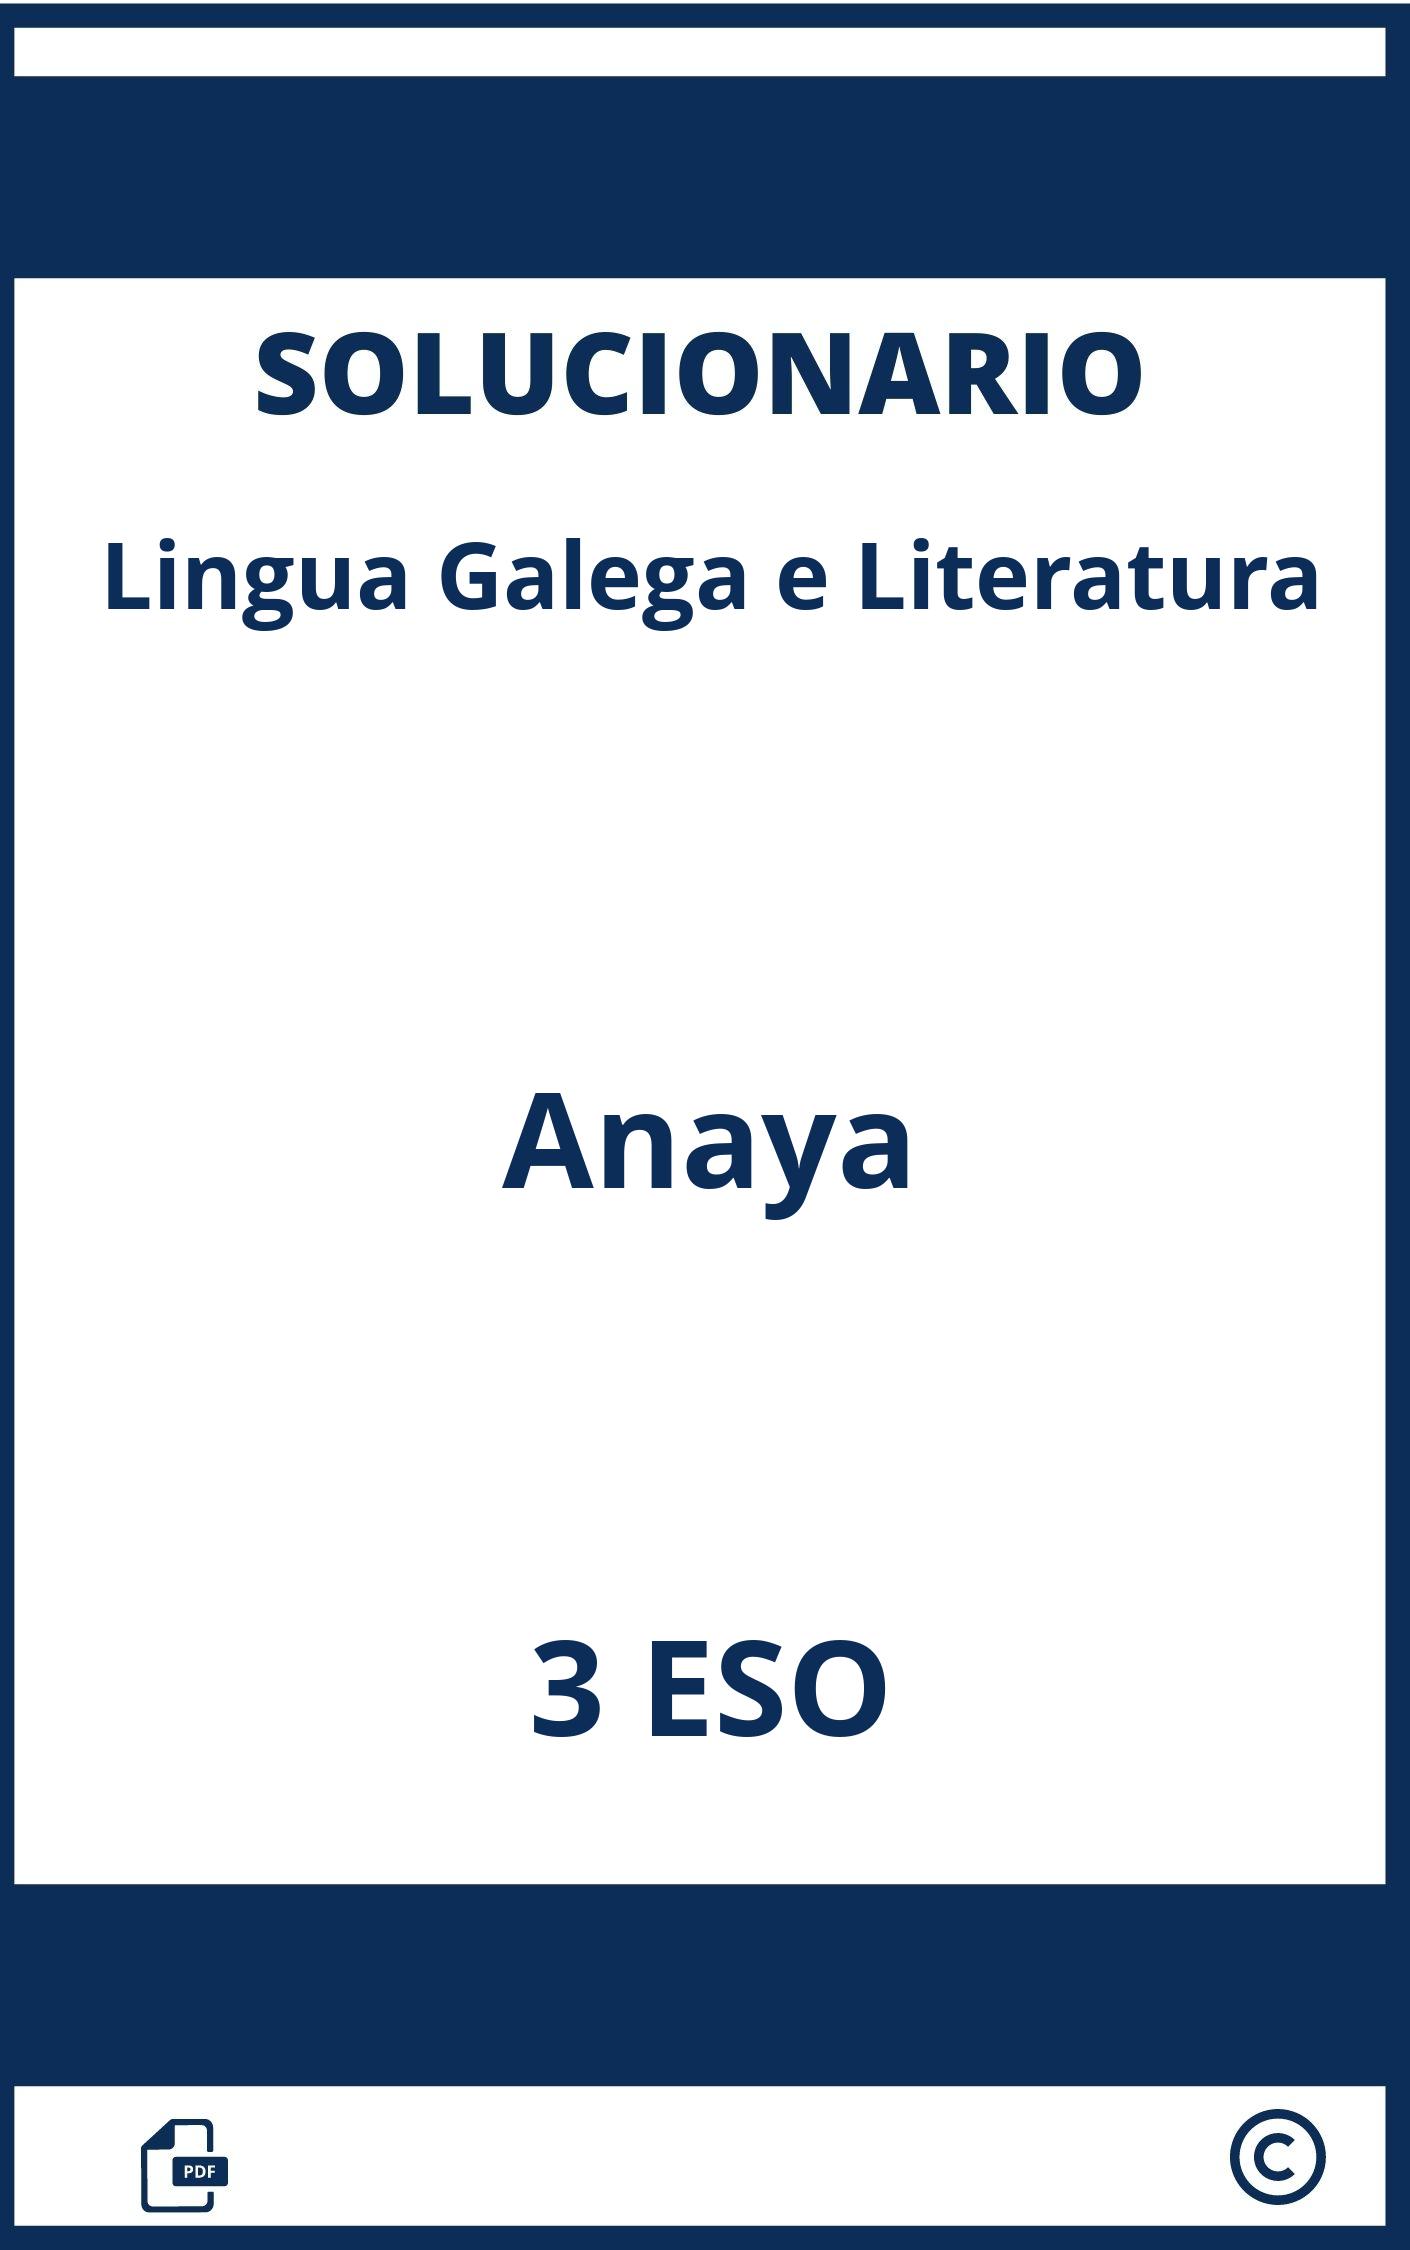 Solucionario Lingua Galega E Literatura Anaya 3 Eso